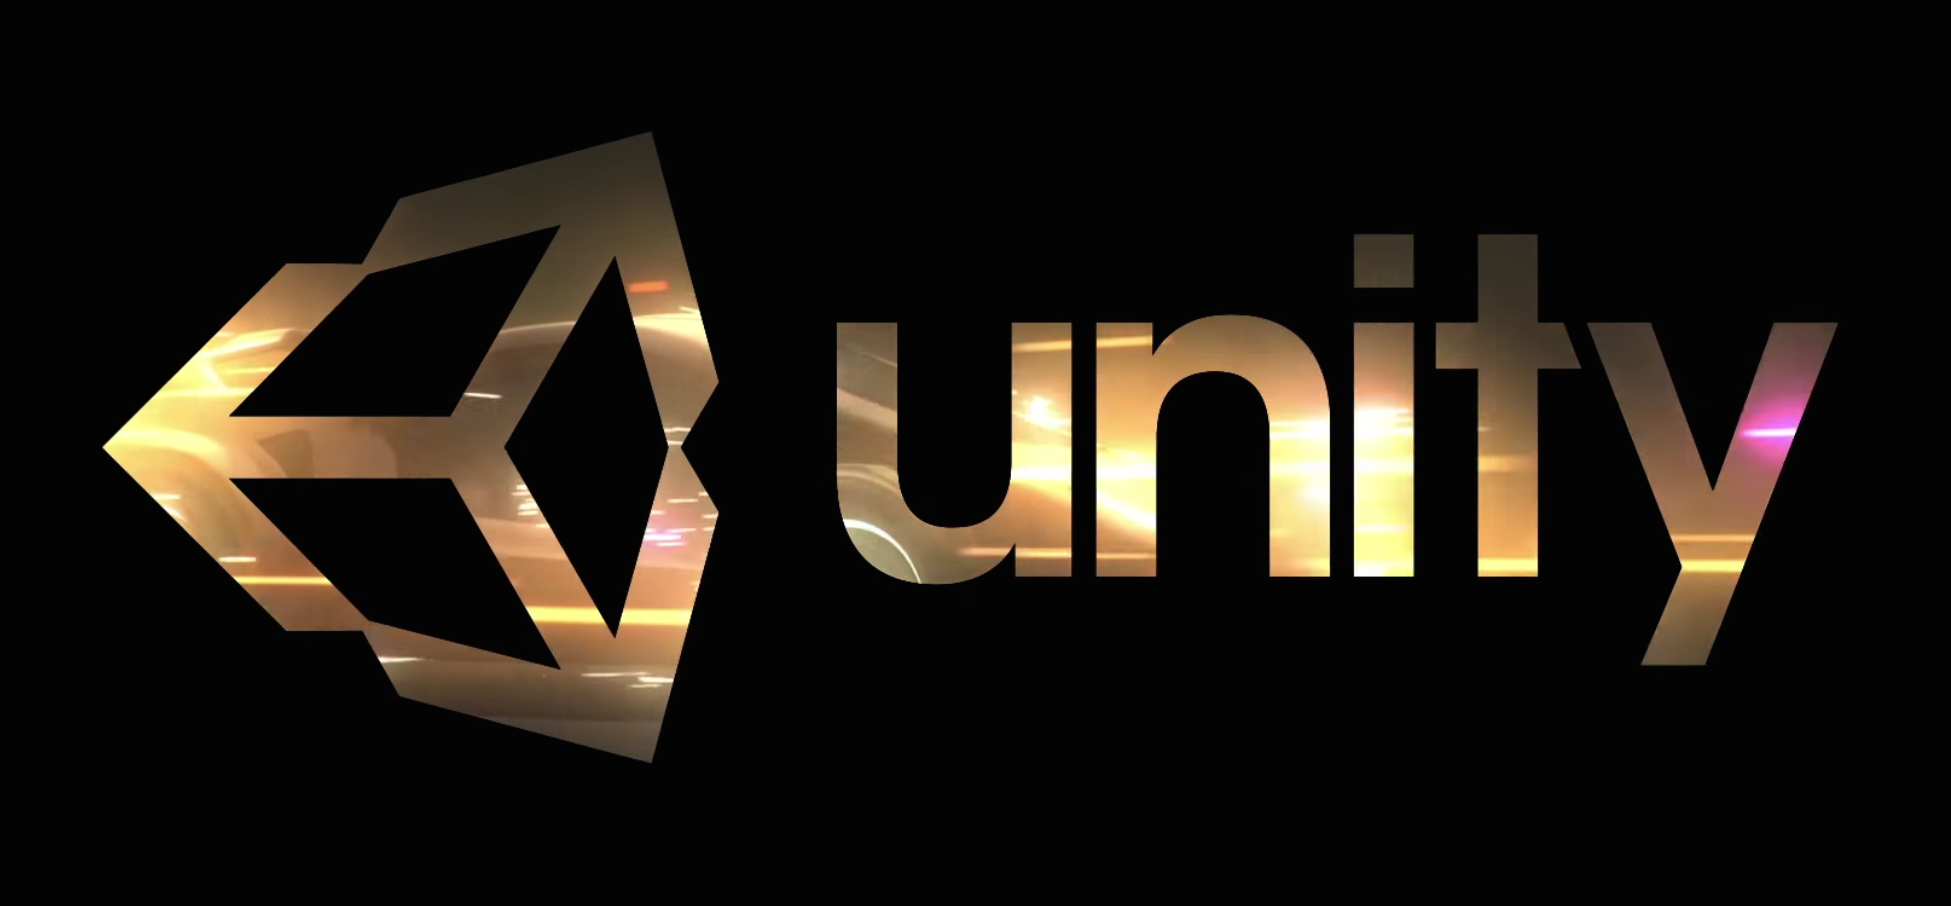 unity game development